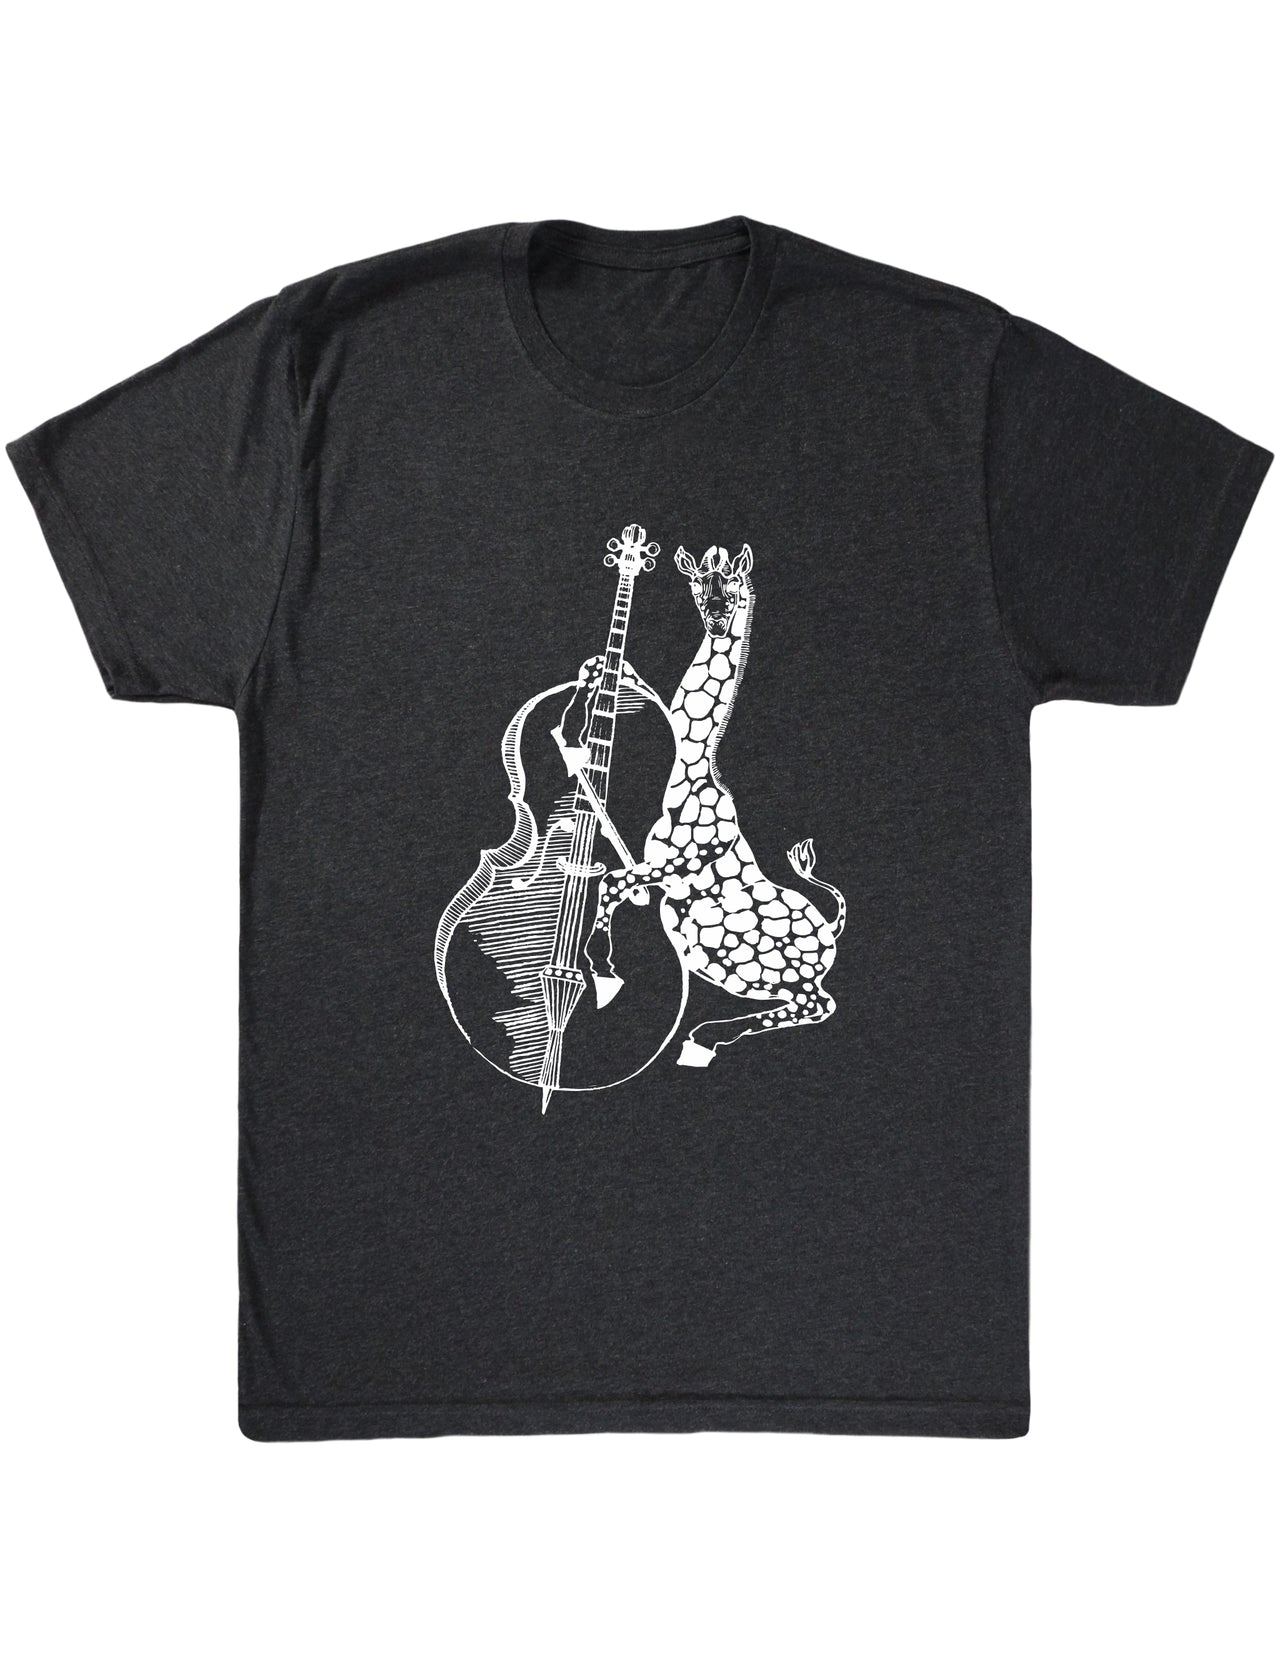 seembo-giraffe-playing-cello-cellist-design-on-a-vintage-black-t-shirt